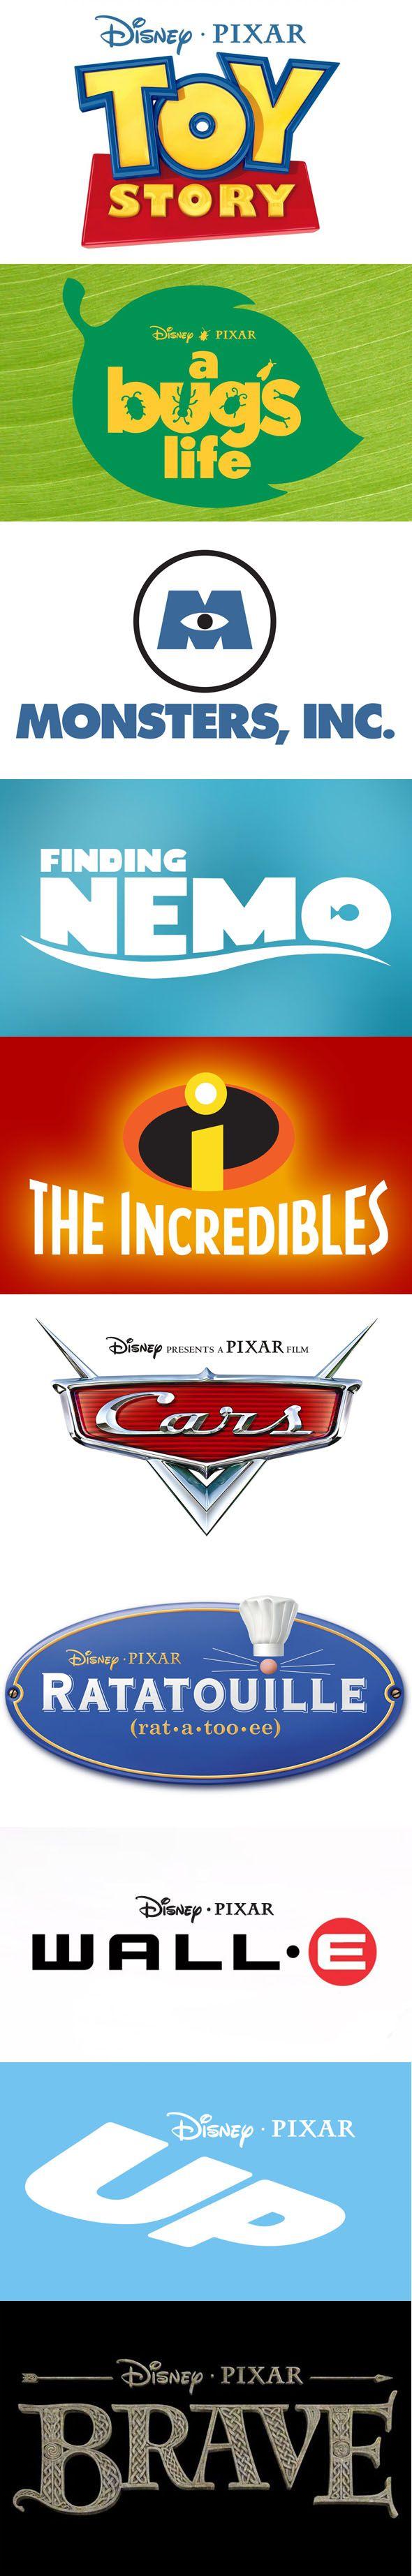 Disney Pixar Films Logo - Pixar Logos. Just Because You Have a Fast Pass.Doesn't Mean You